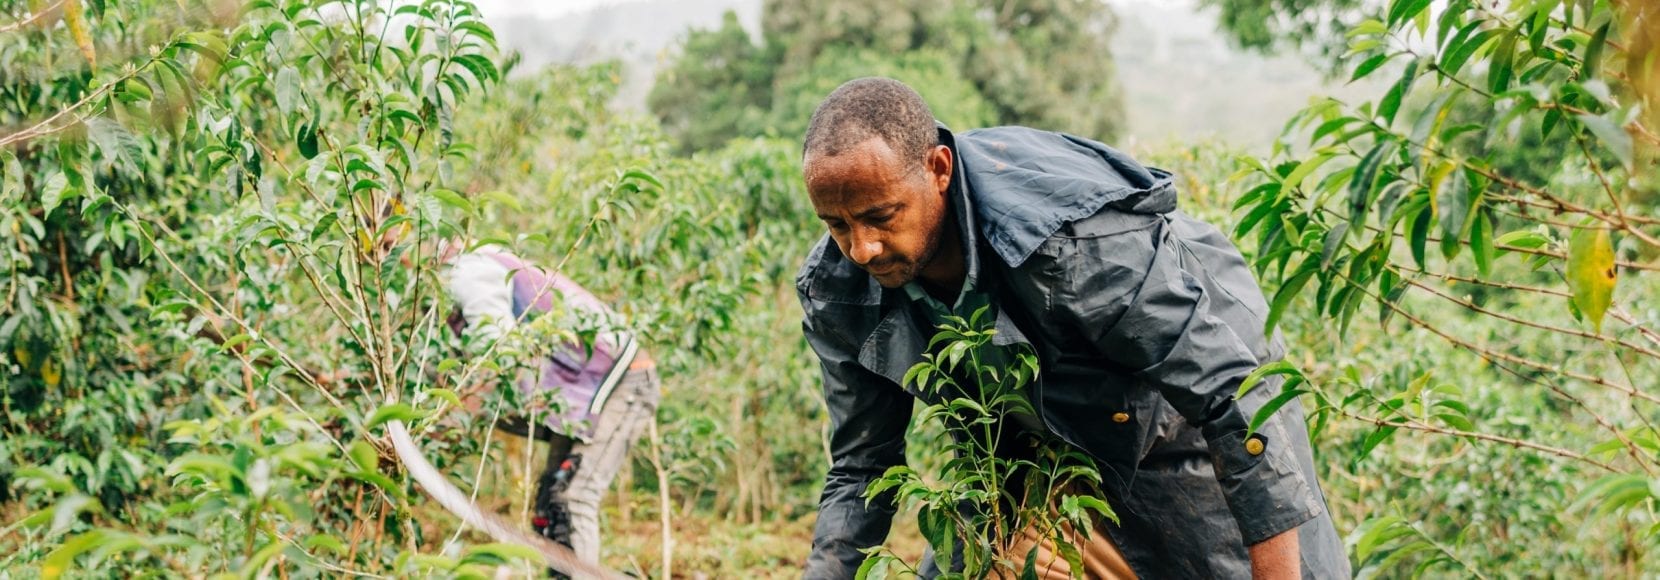 A coffee farmer in Ethiopia tends to his farm